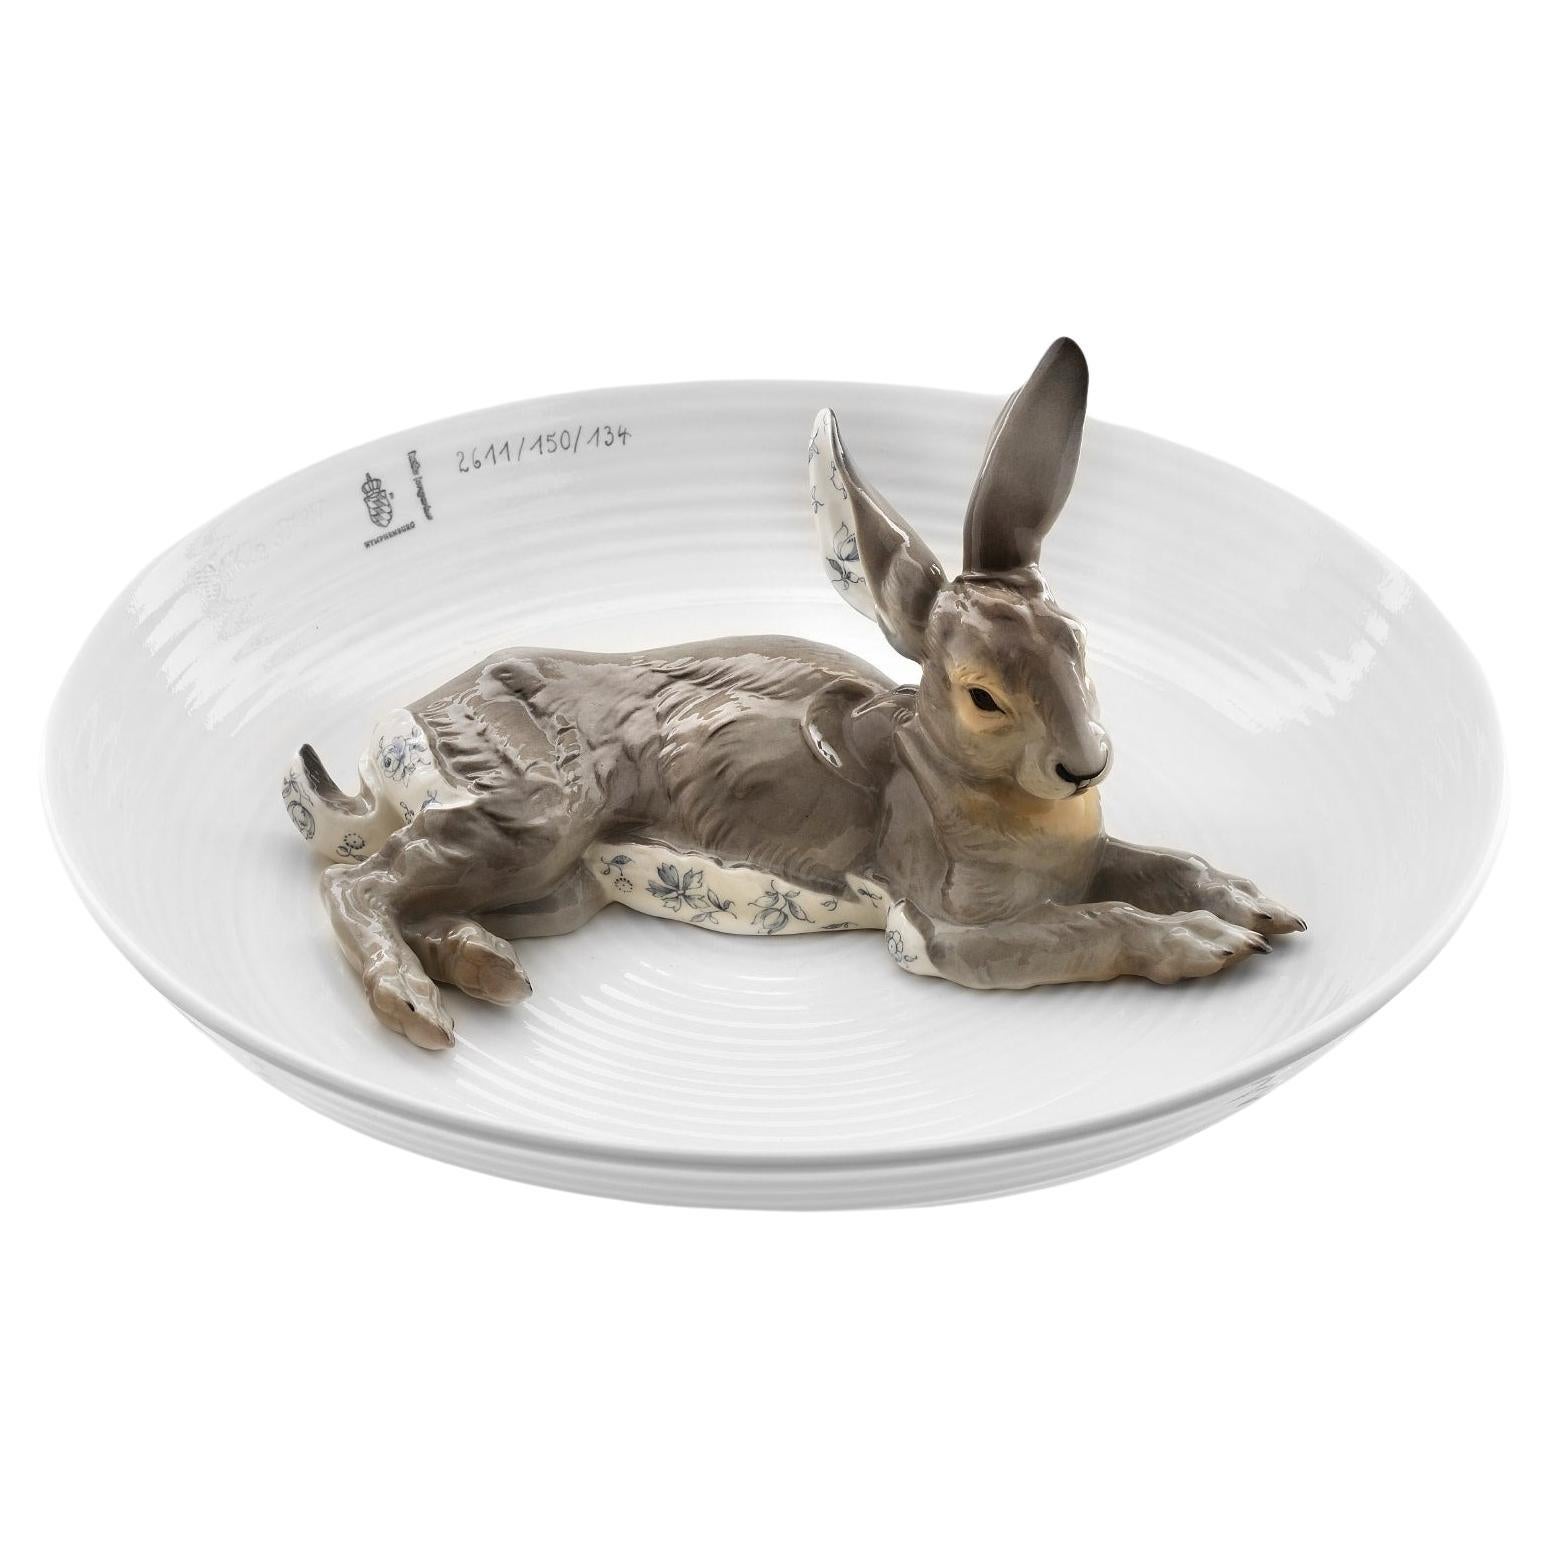 Hella Jongerius Animal Bowl Rabbit, Design Must Have, Serving Bowl, Decorative  For Sale